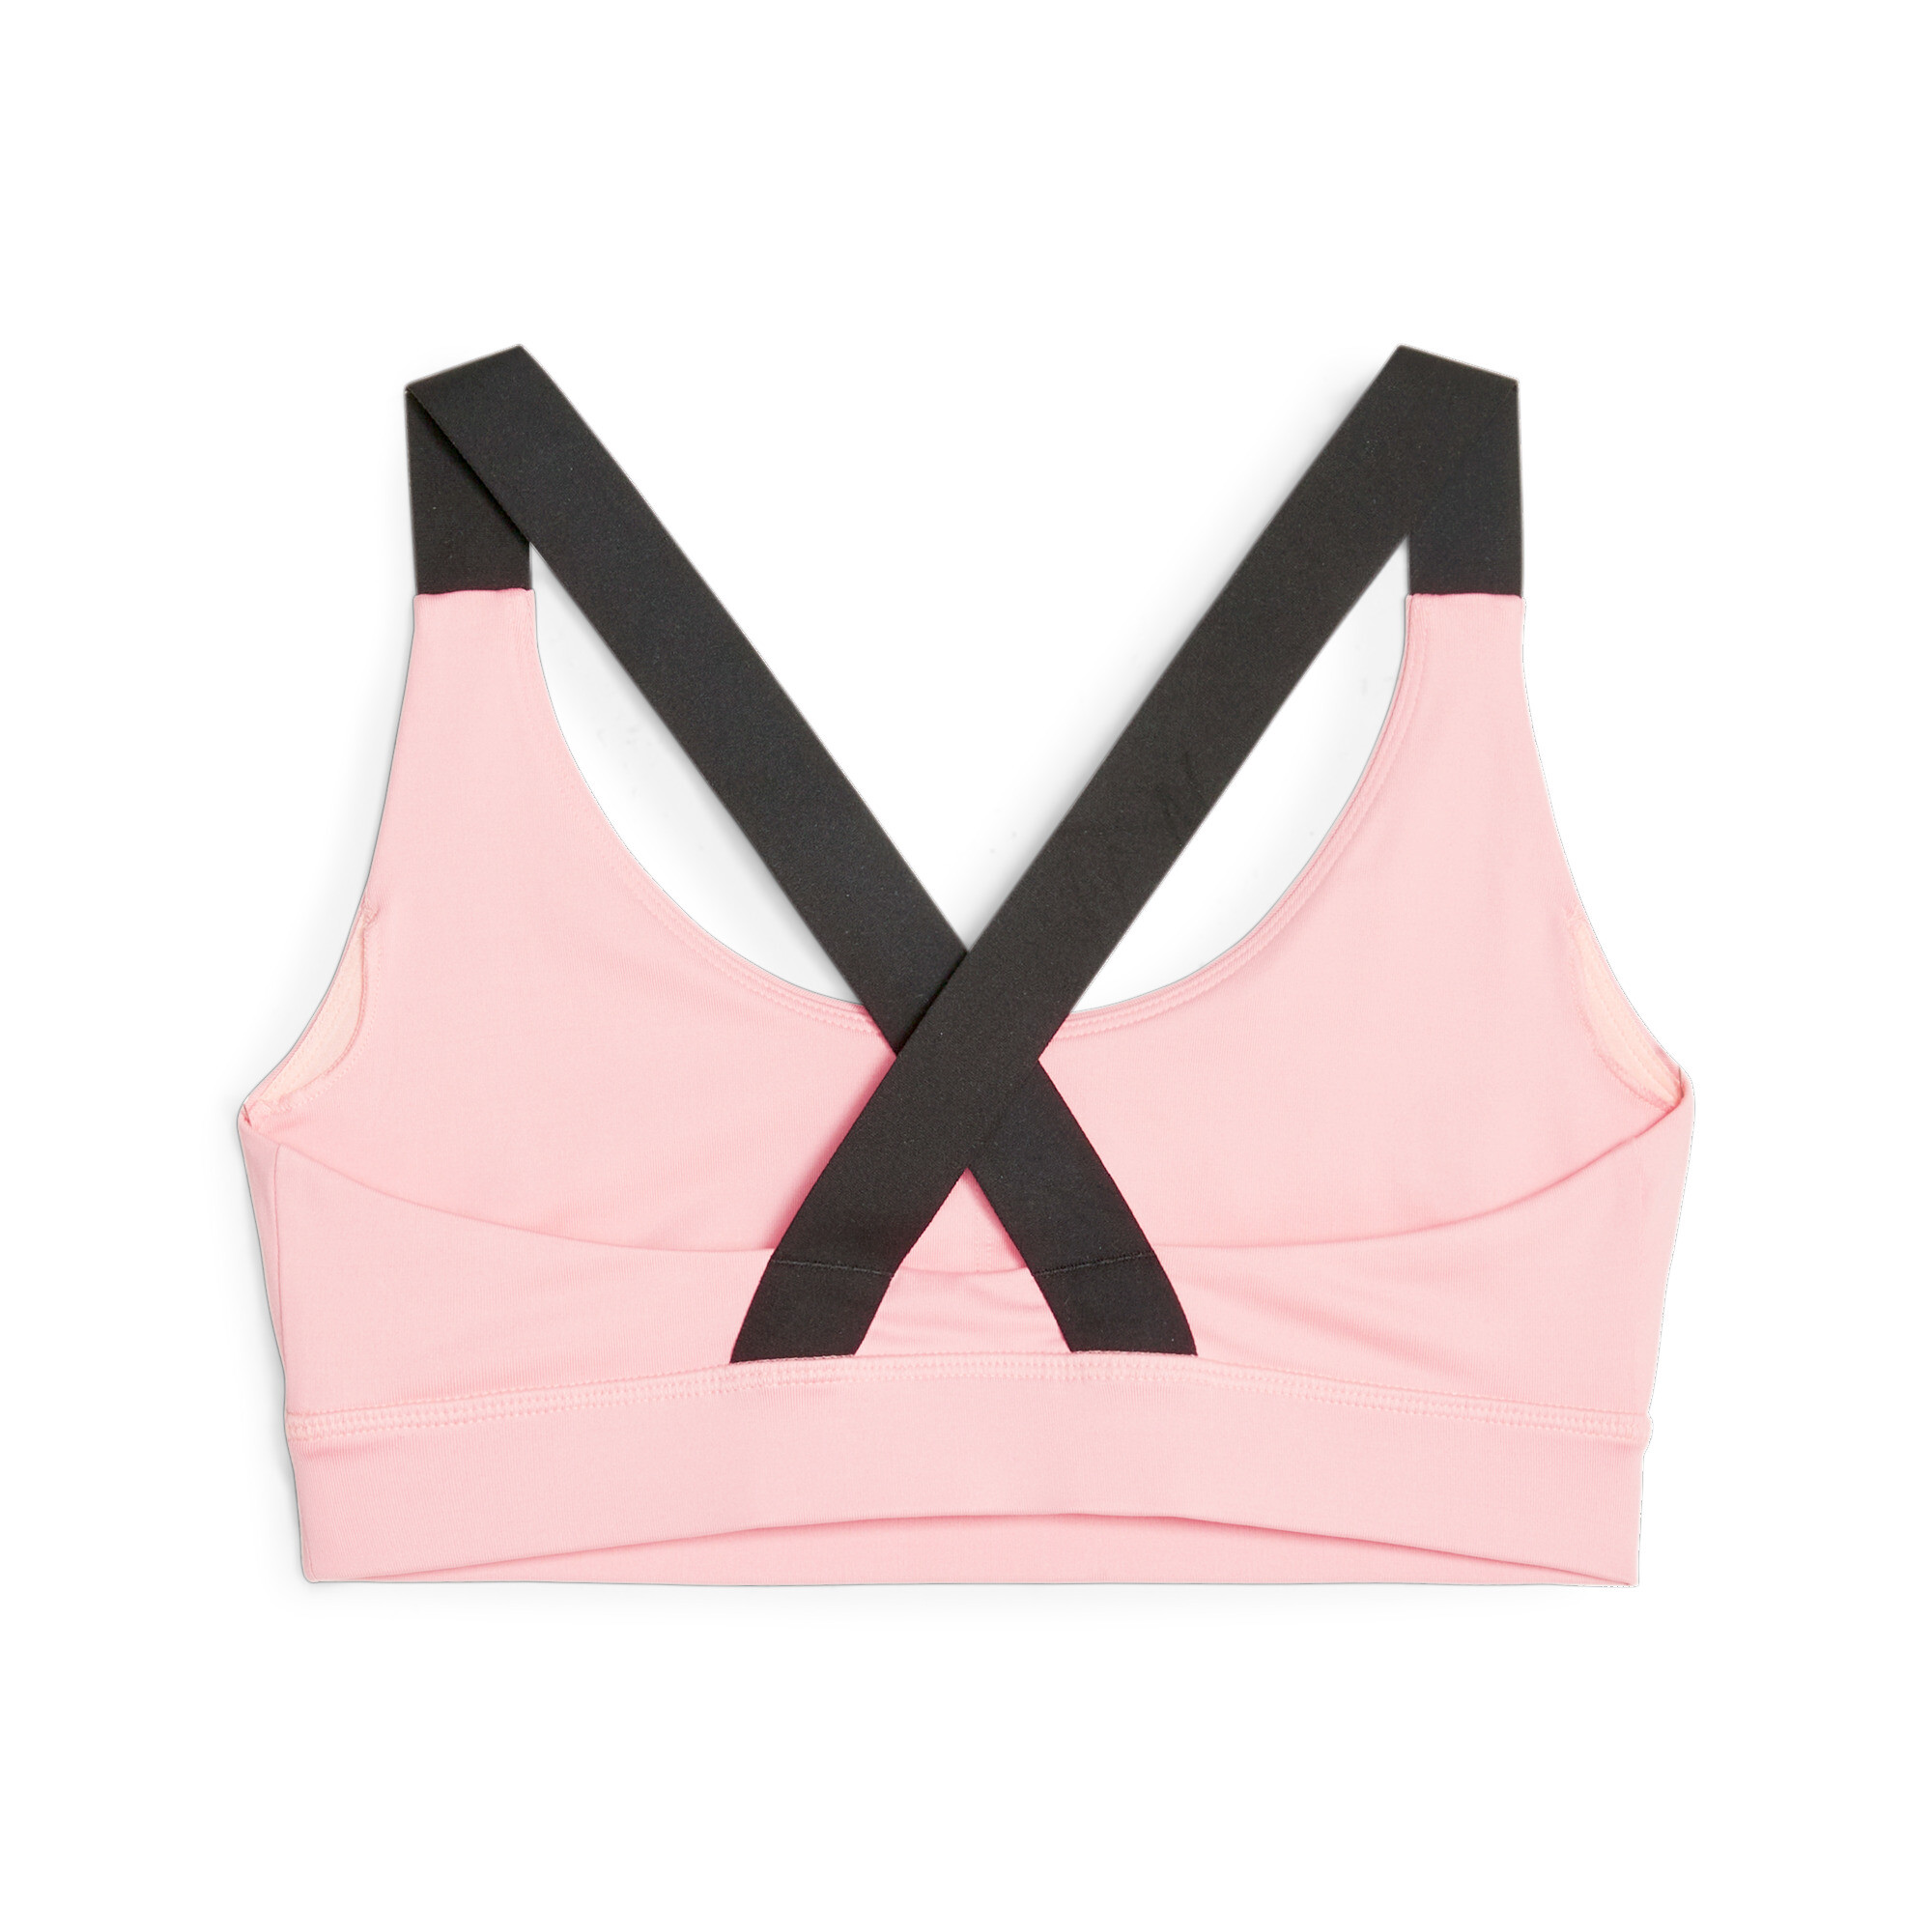 Women's Puma Fit Mid Impact Training Bra, Pink, Size XXL, Clothing